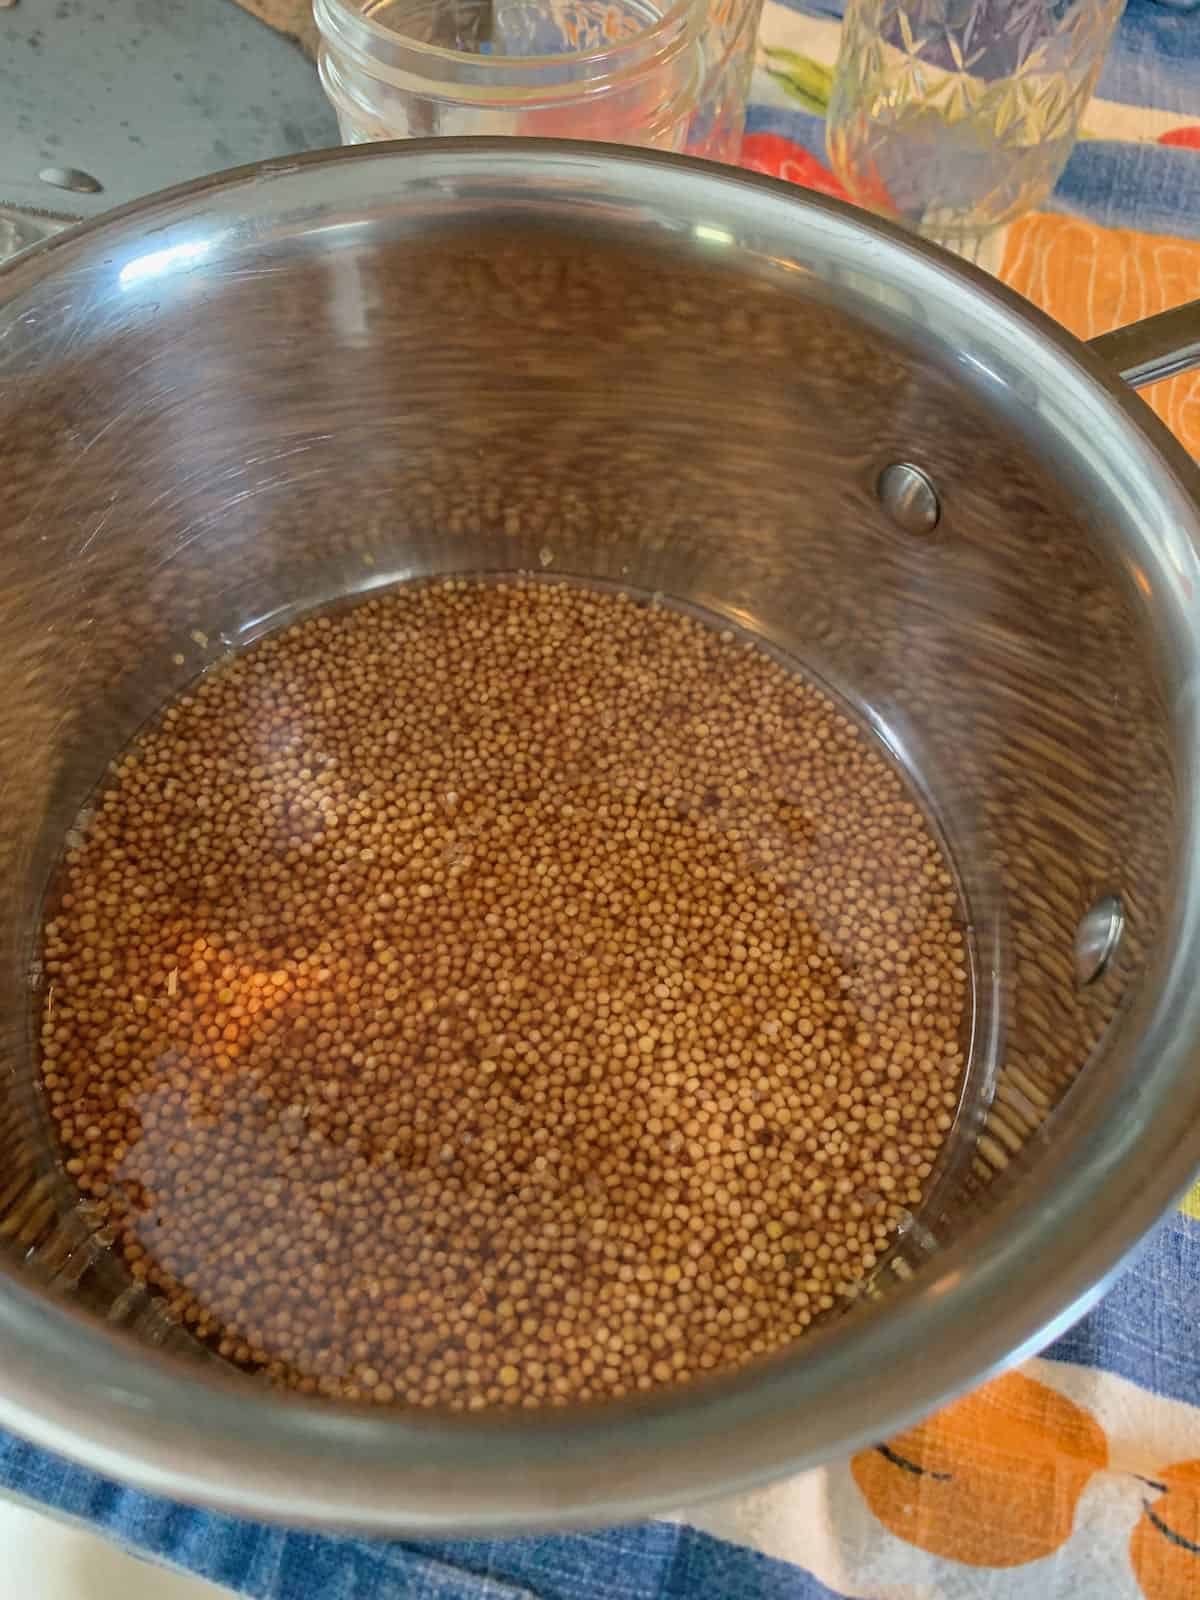 mustard seeds soaking in vinegar